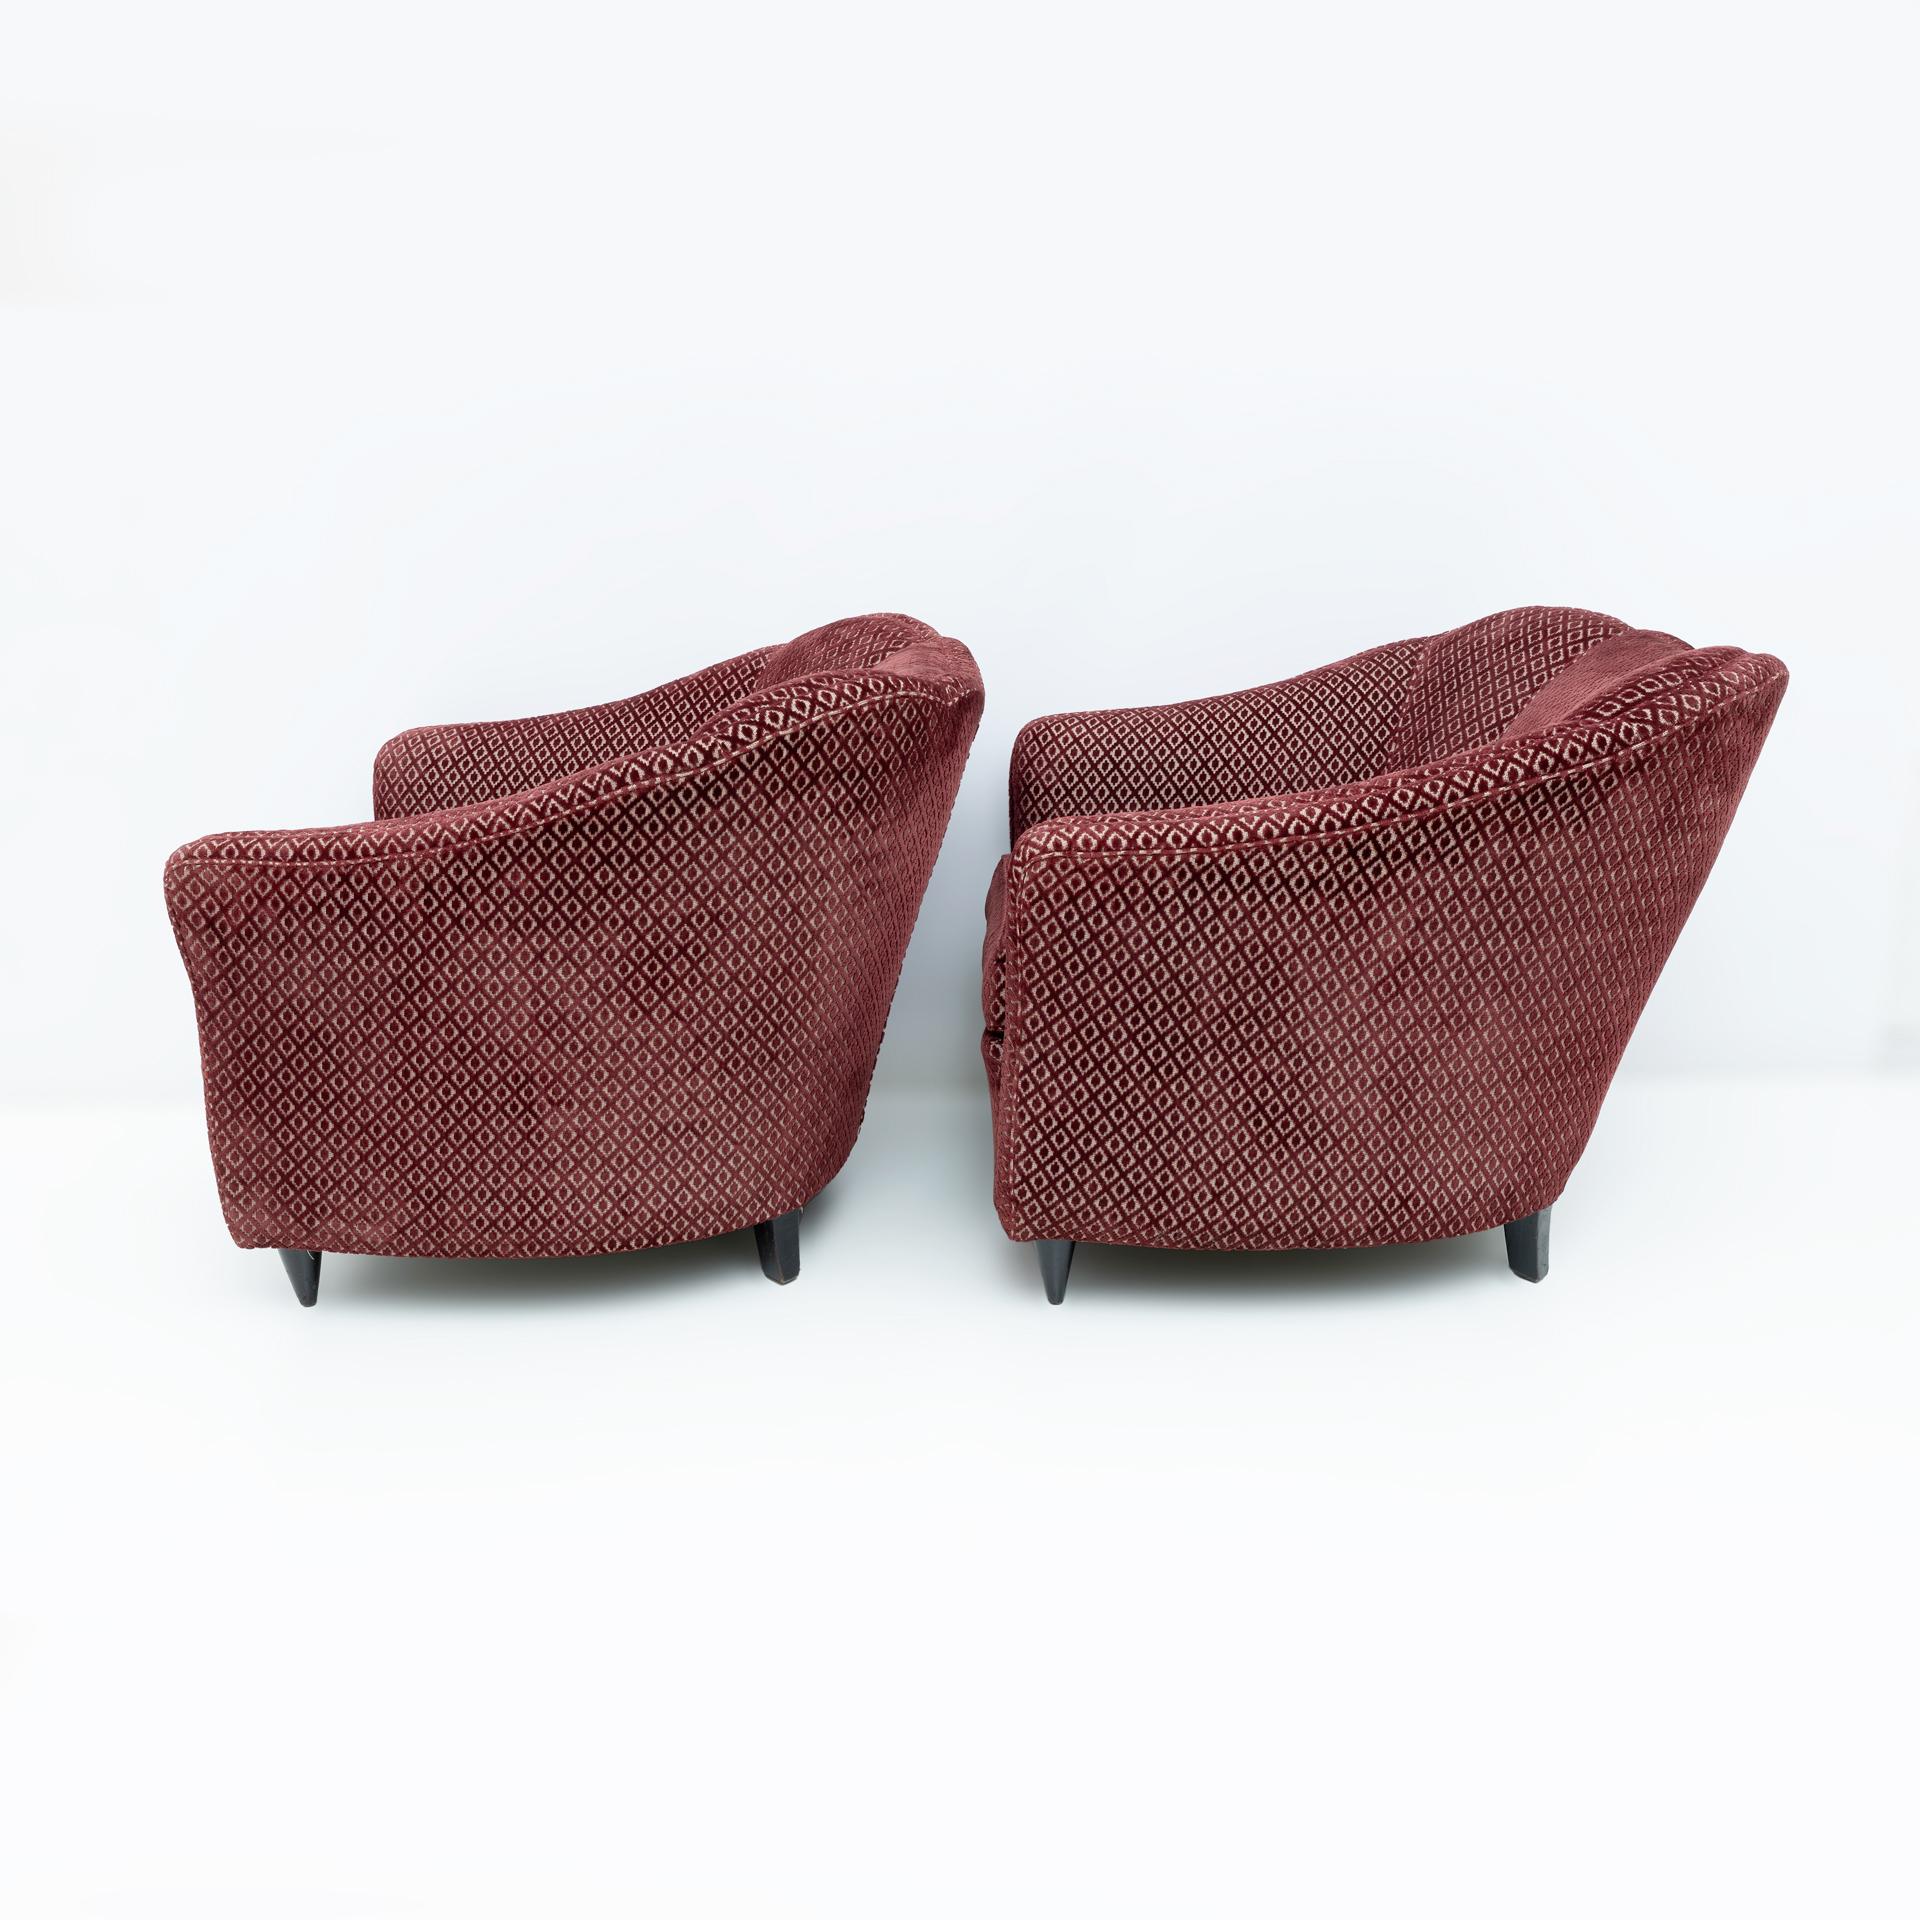 Pair of Gio Ponti Mid-Century Modern Velvet Armchairs for Casa e Giardino, 1950s For Sale 1